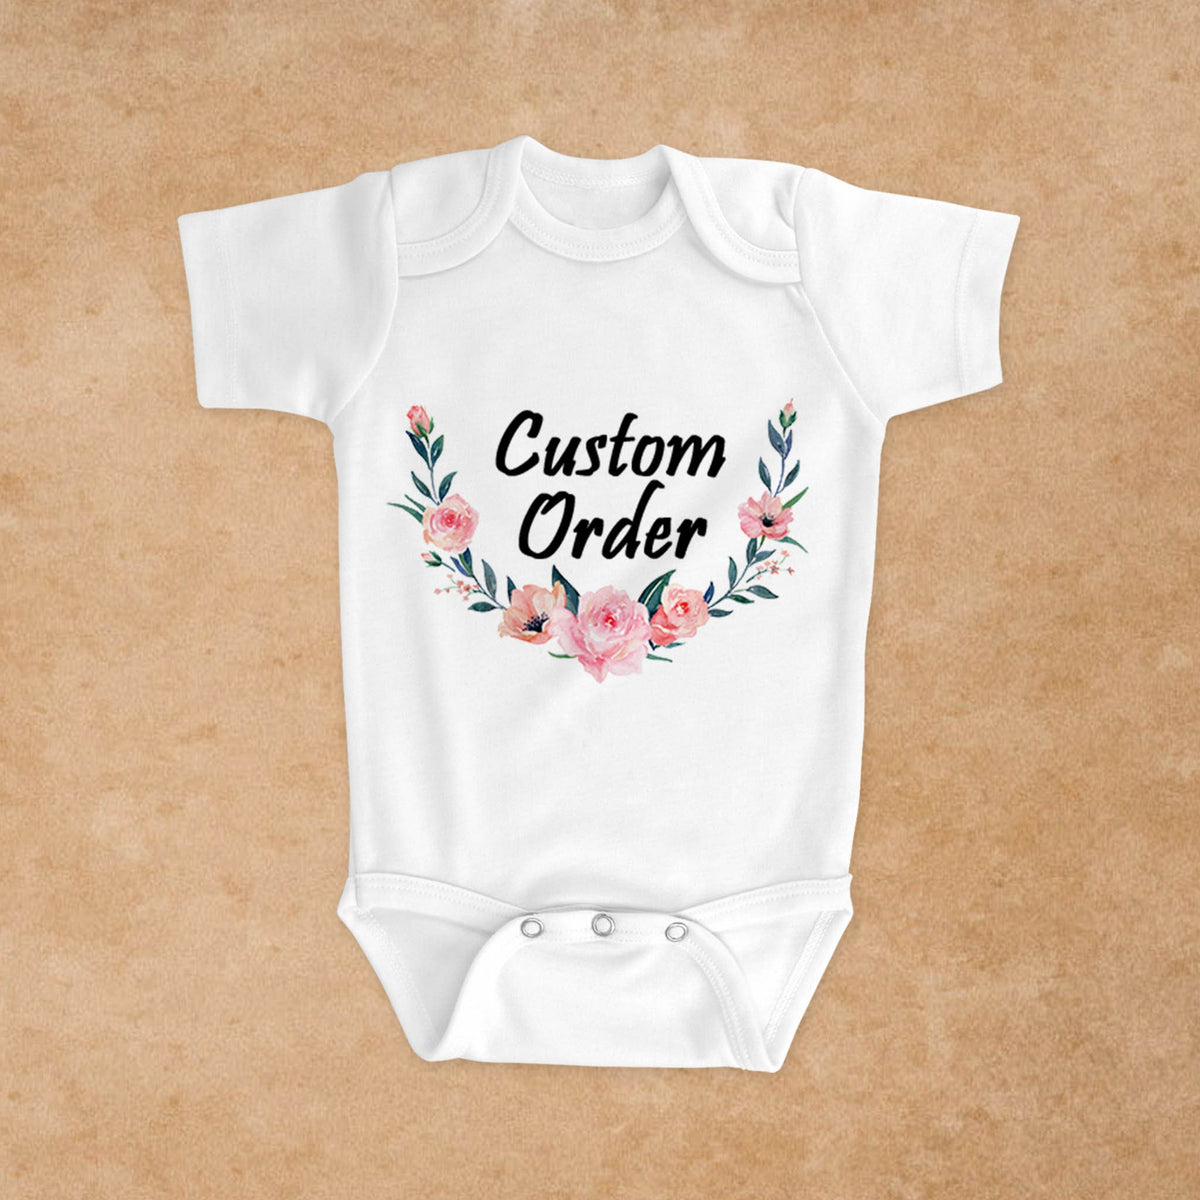 Personalized Baby Bib | Custom Baby Gifts | Baby Shower | Custom Order